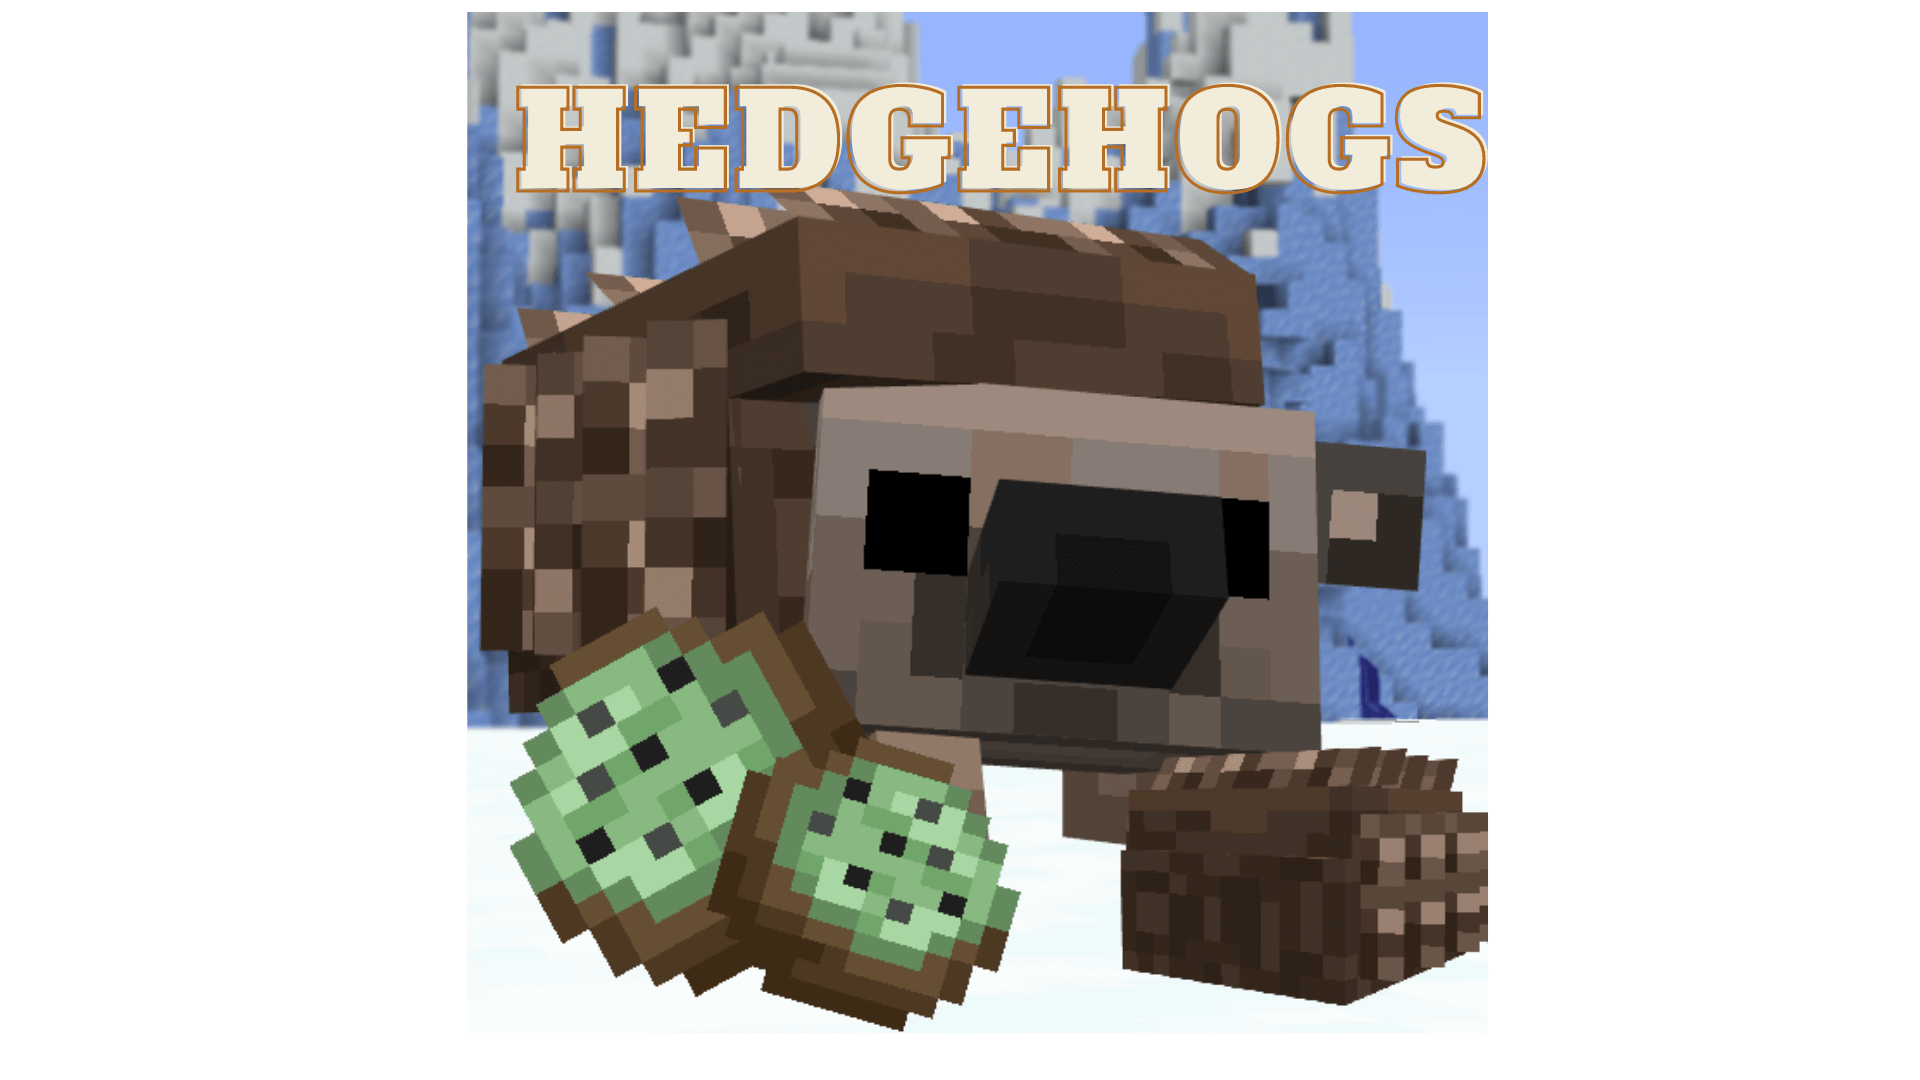 Hedgehogs Mod